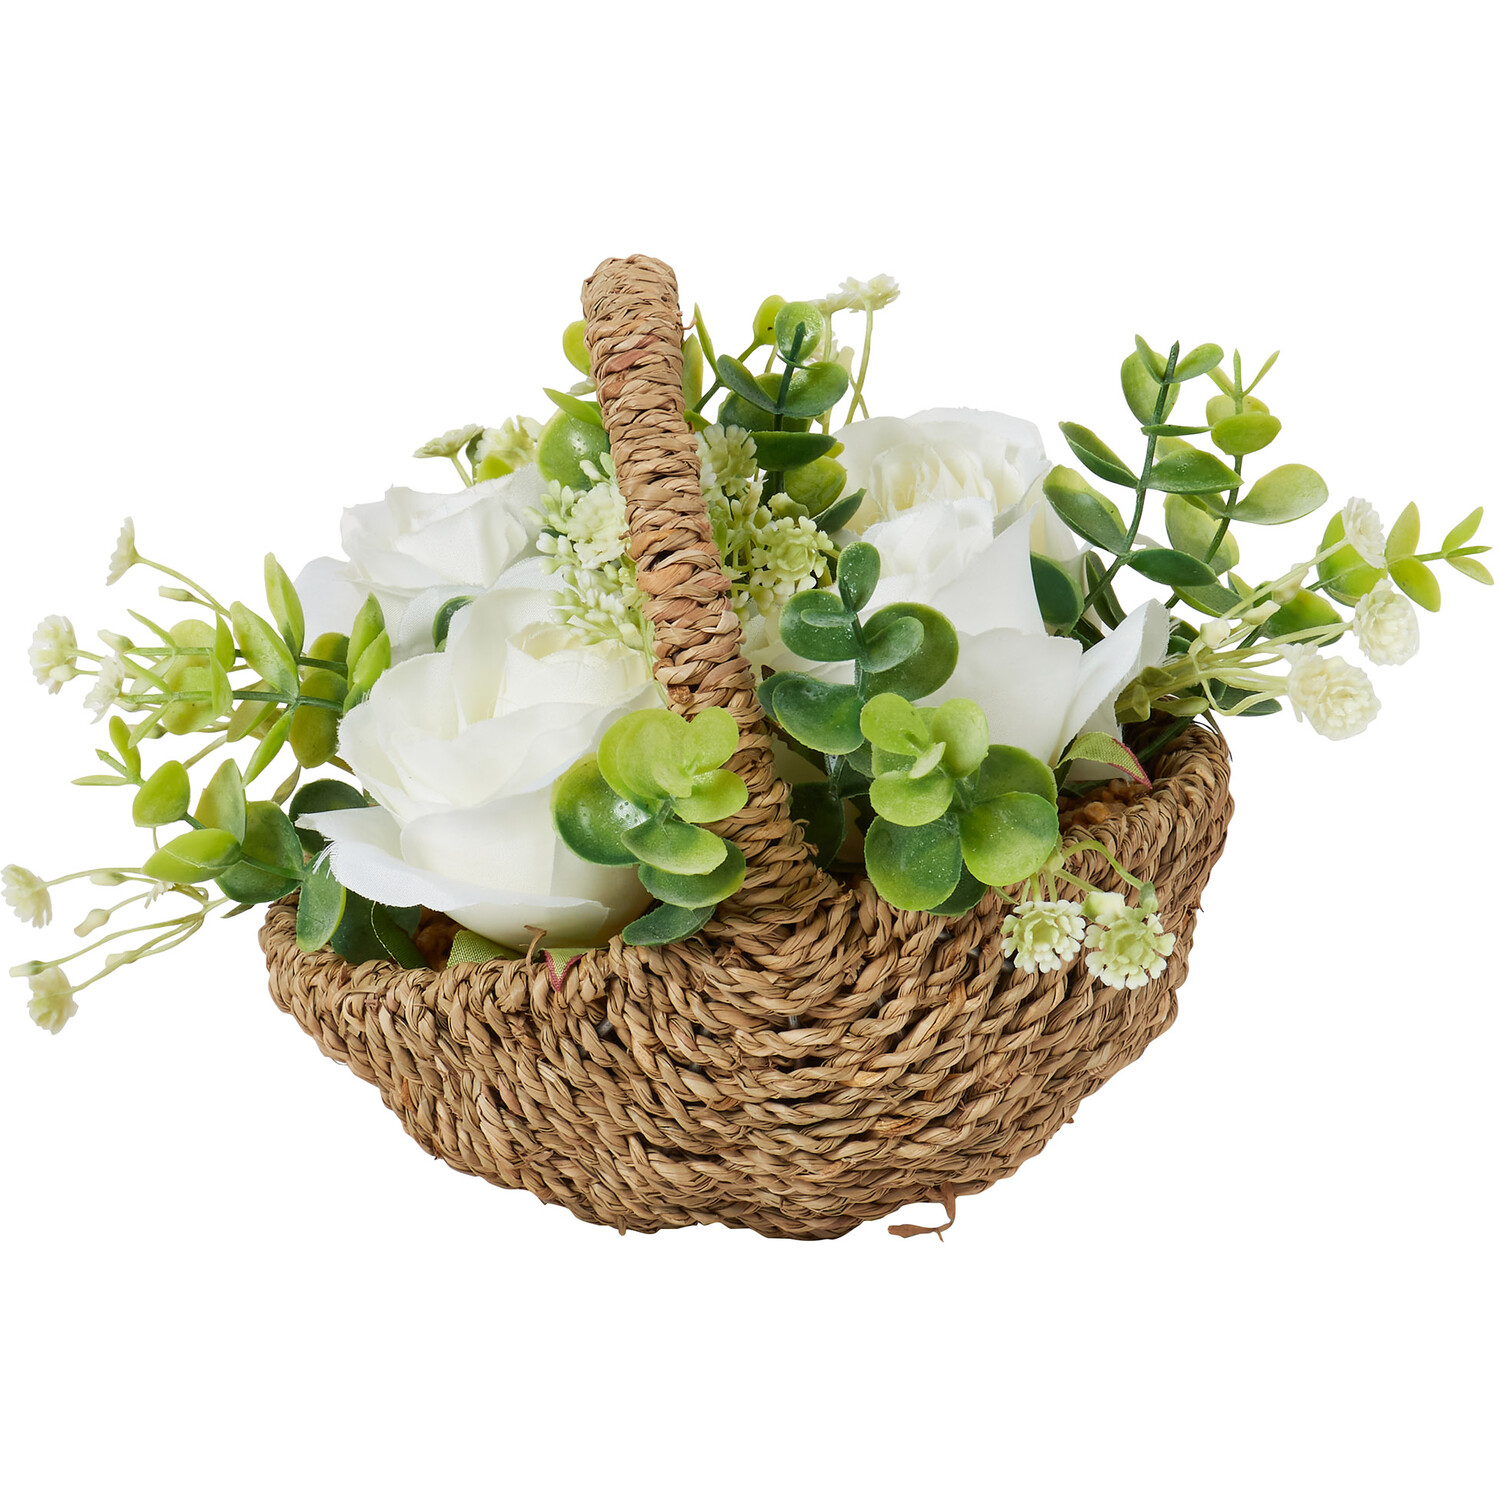 Rose Artificial Flower in Basket Image 1